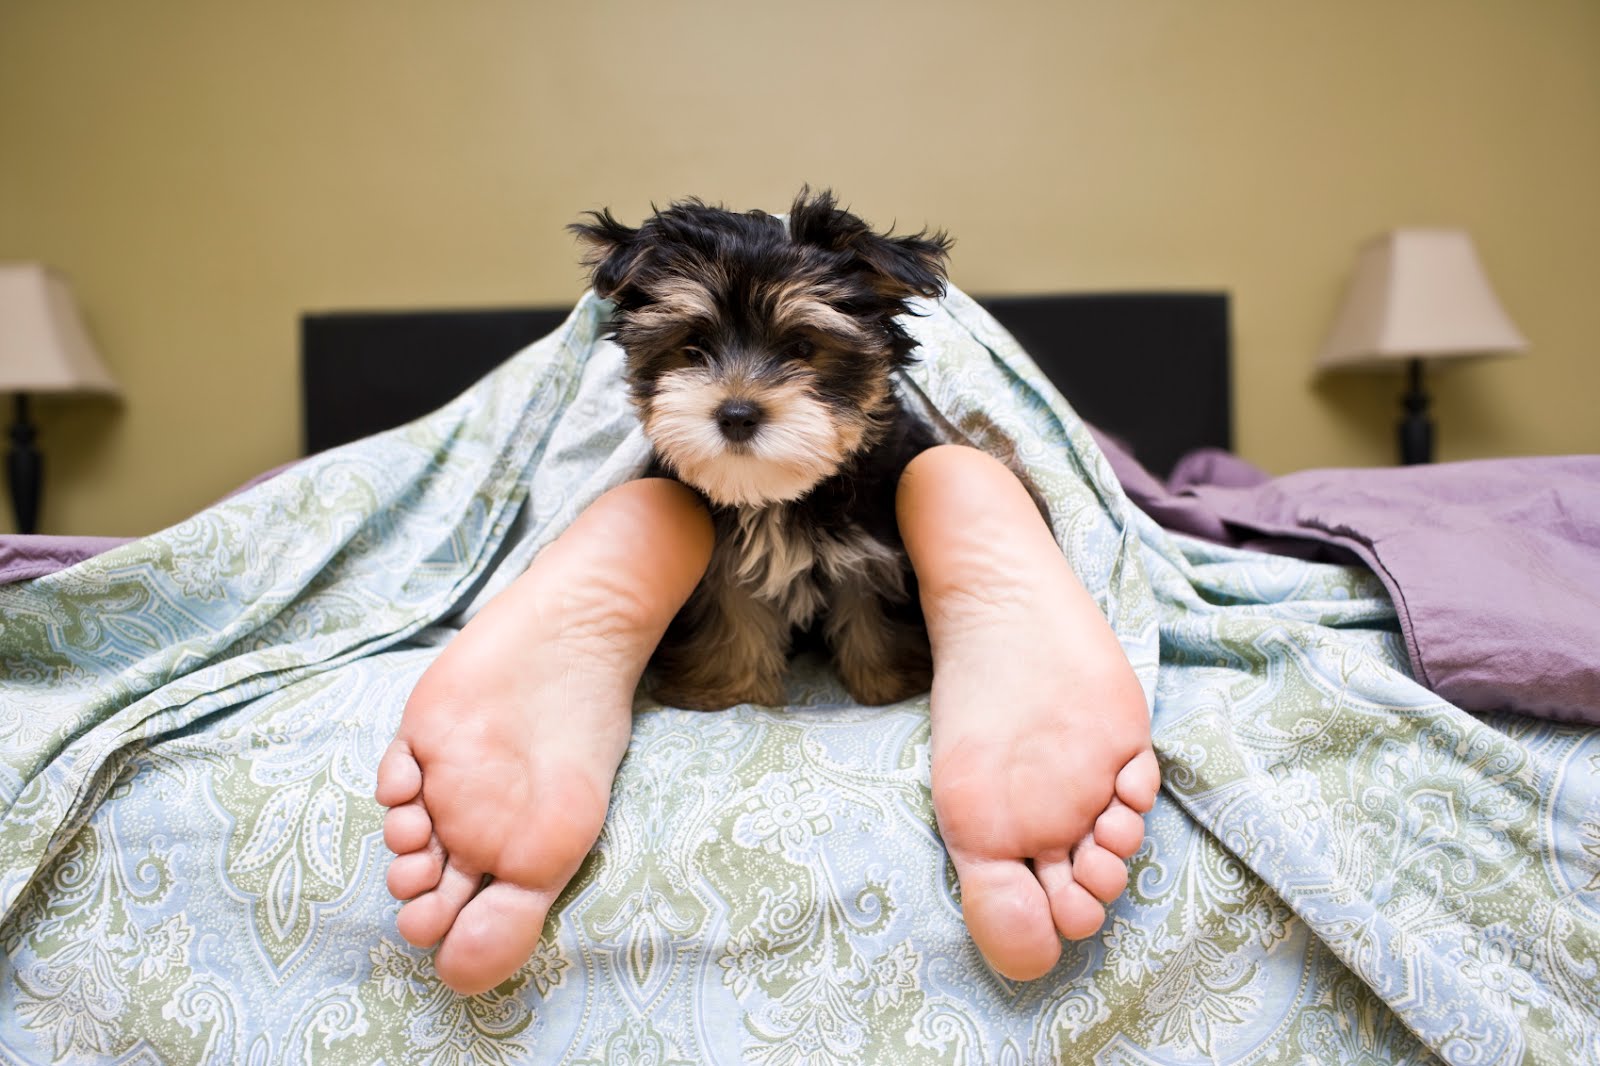 sleep puppy iStock 000015227531Medium | Stay at Home Mum.com.au